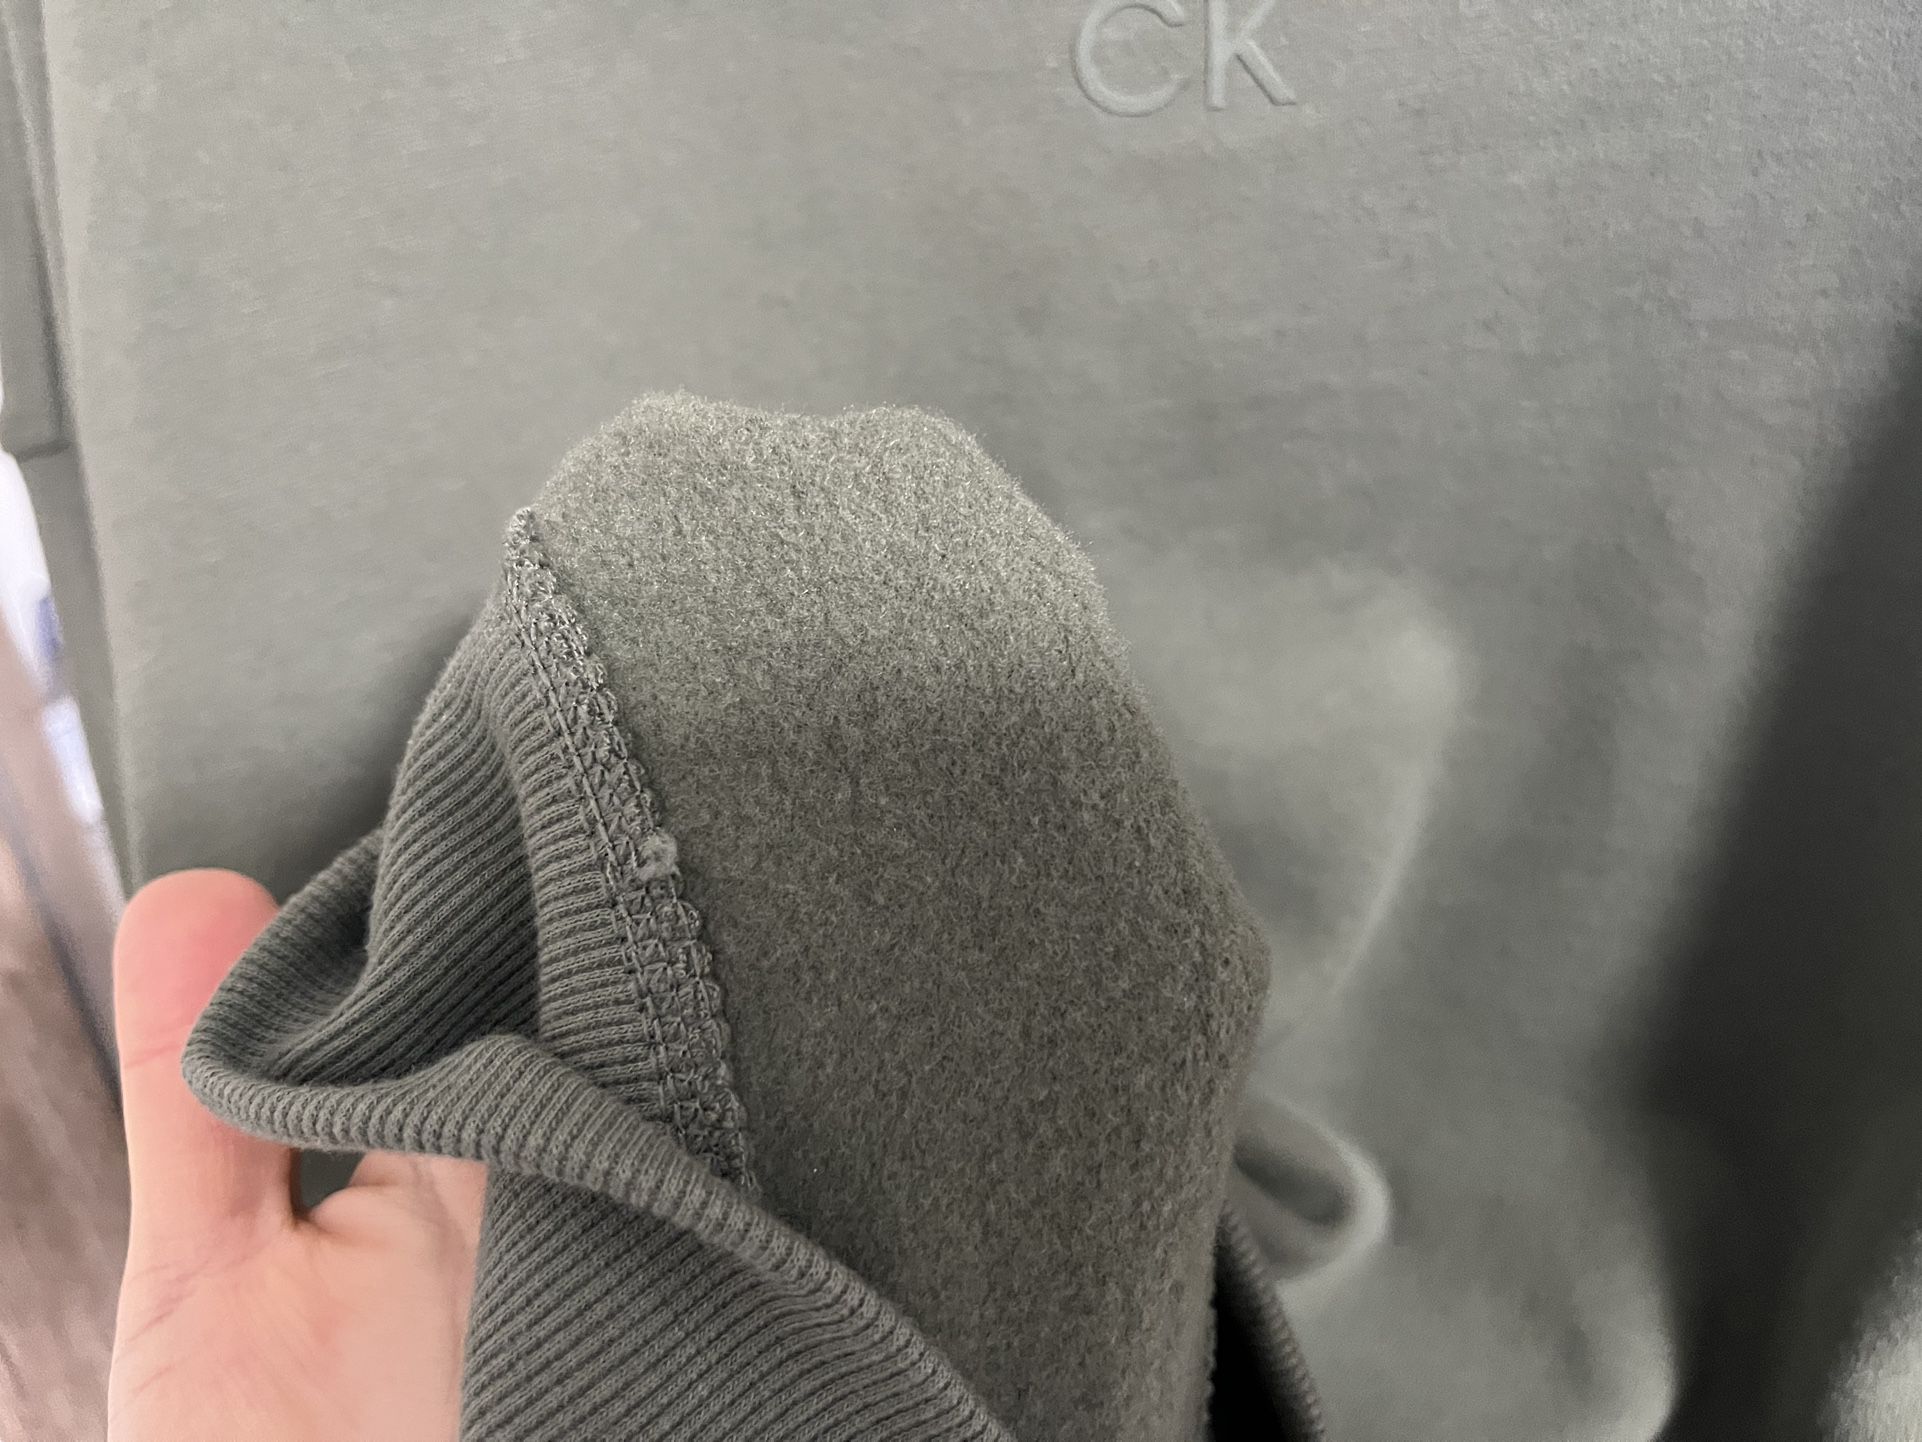 Calvin Klein Men’s Fleece Lightweight Loose Fit Sleeve Sweatshirt Size XS